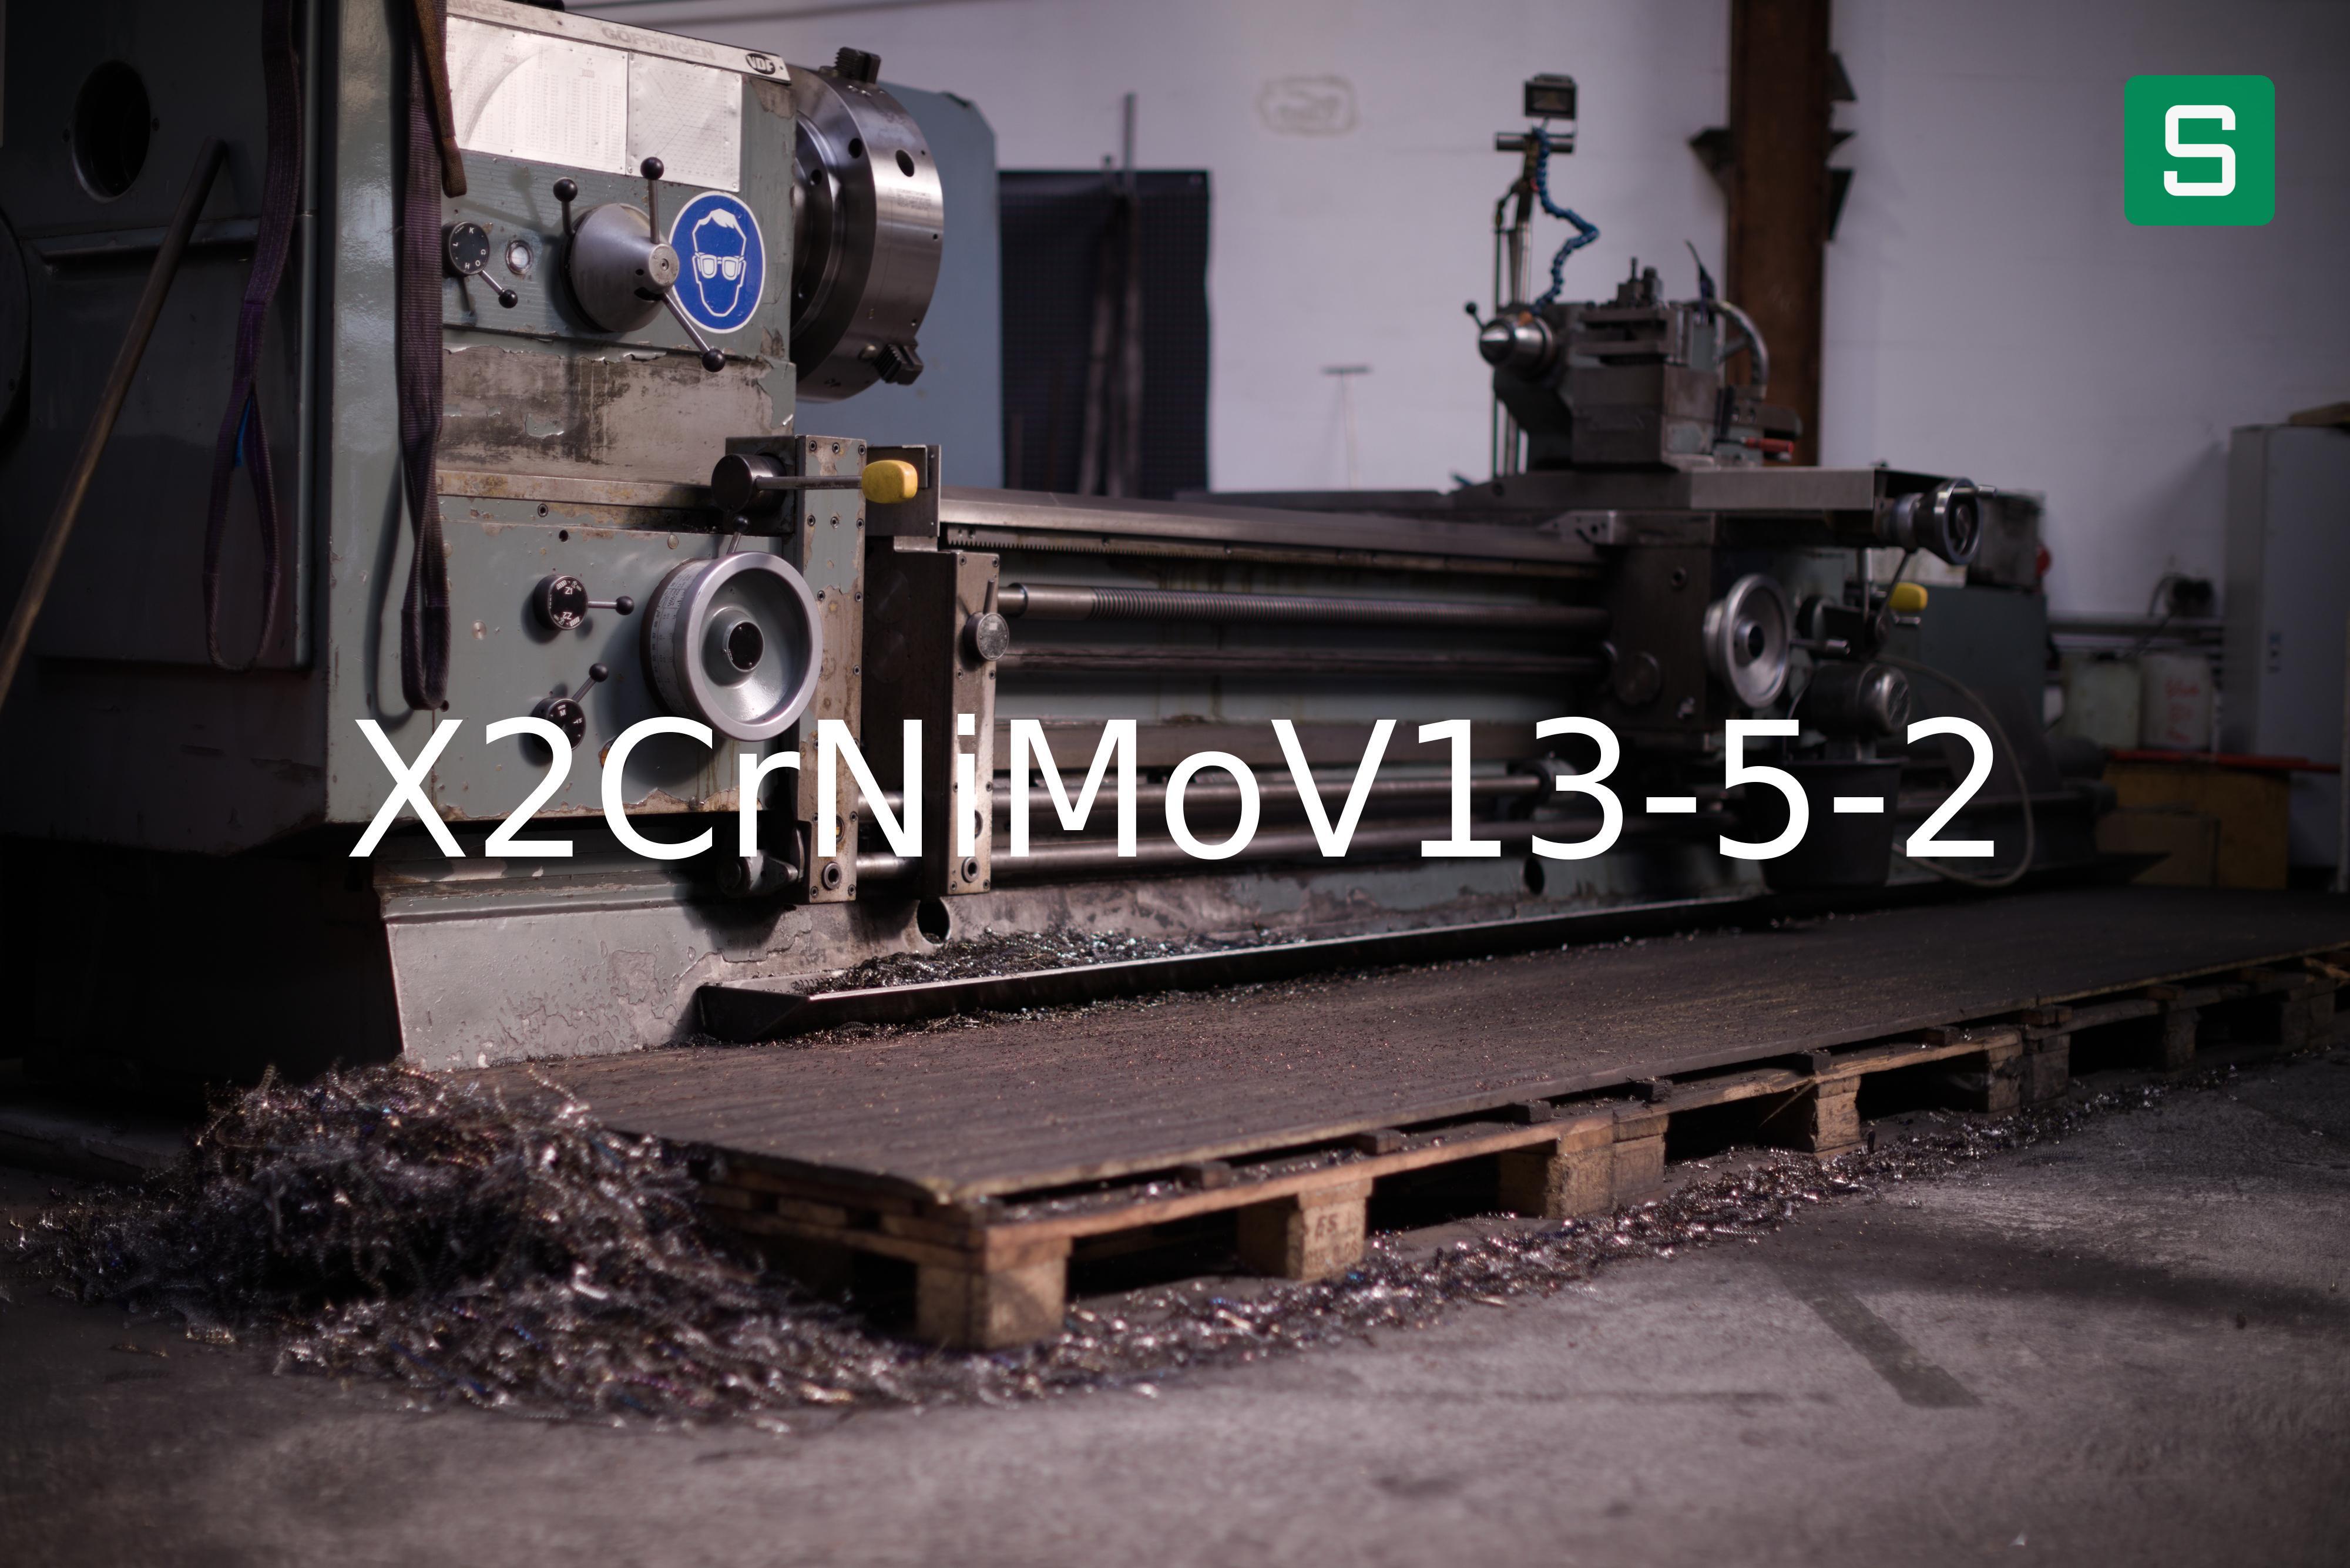 Steel Material: X2CrNiMoV13-5-2